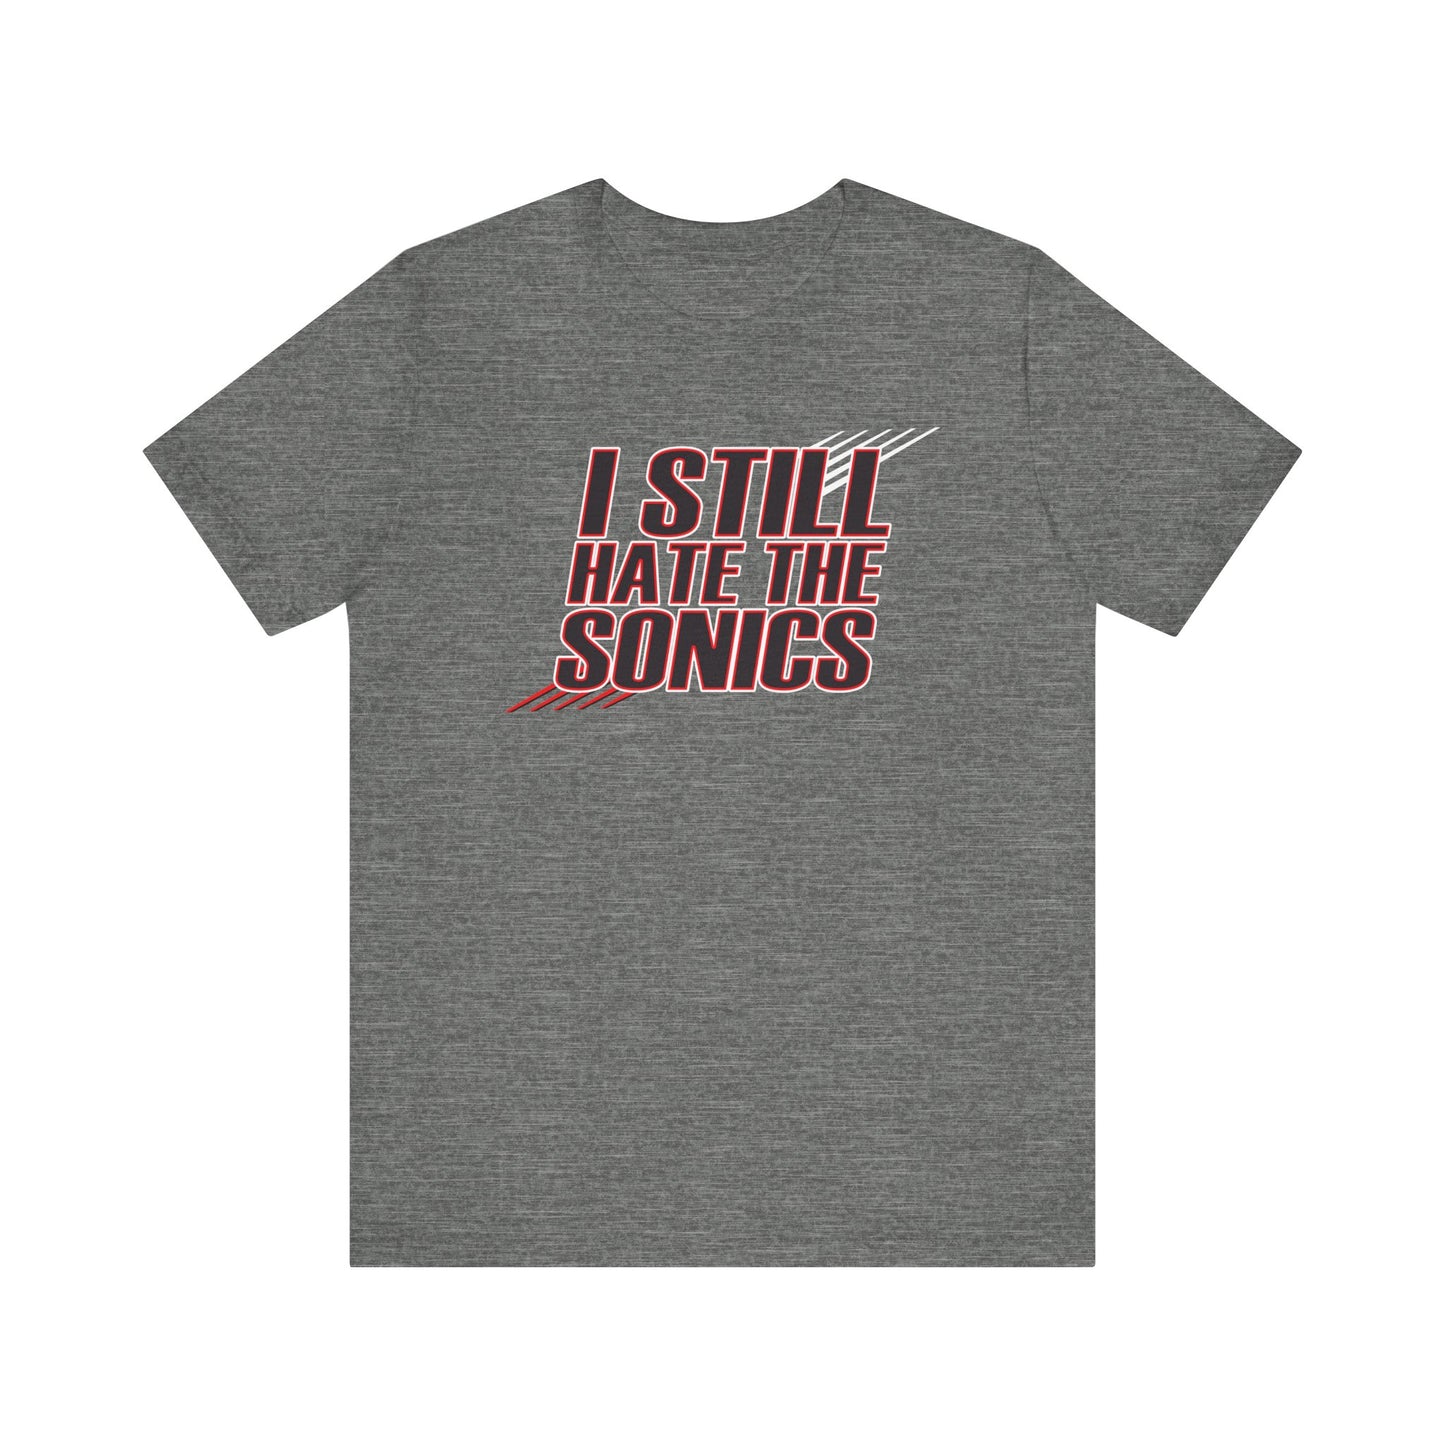 I Still Hate The Sonics (for Portland fans) - Unisex Jersey Short Sleeve Tee